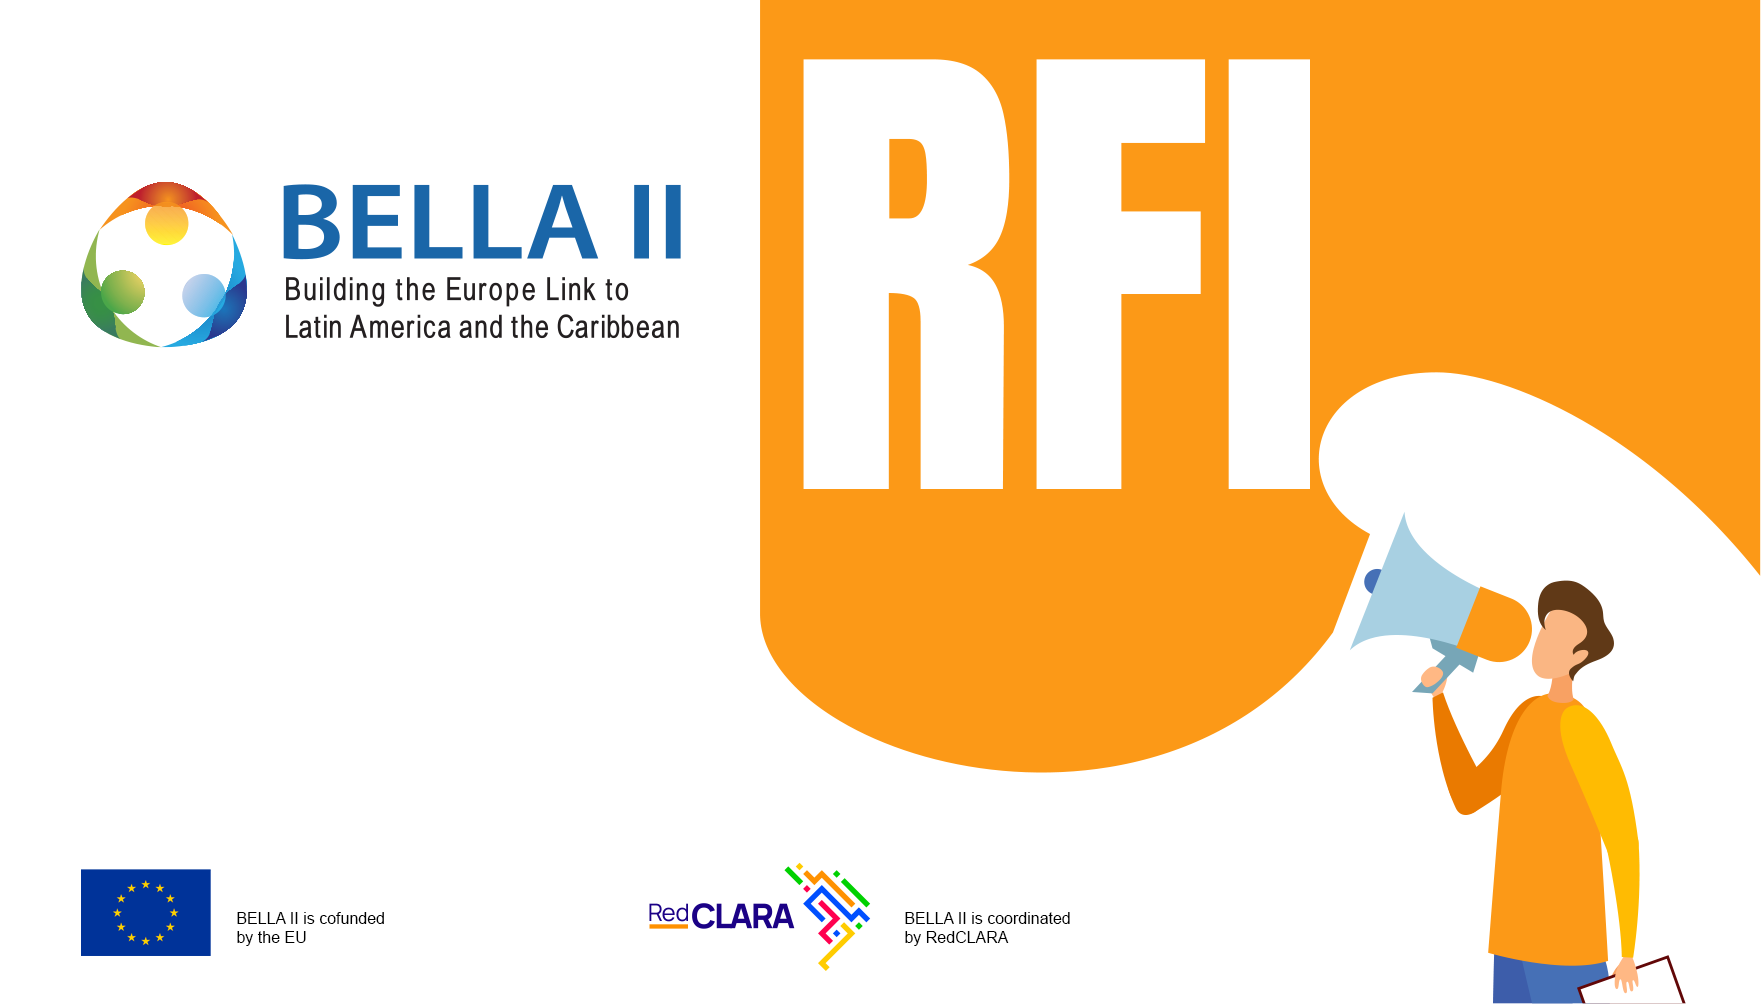 RFI BELLA II